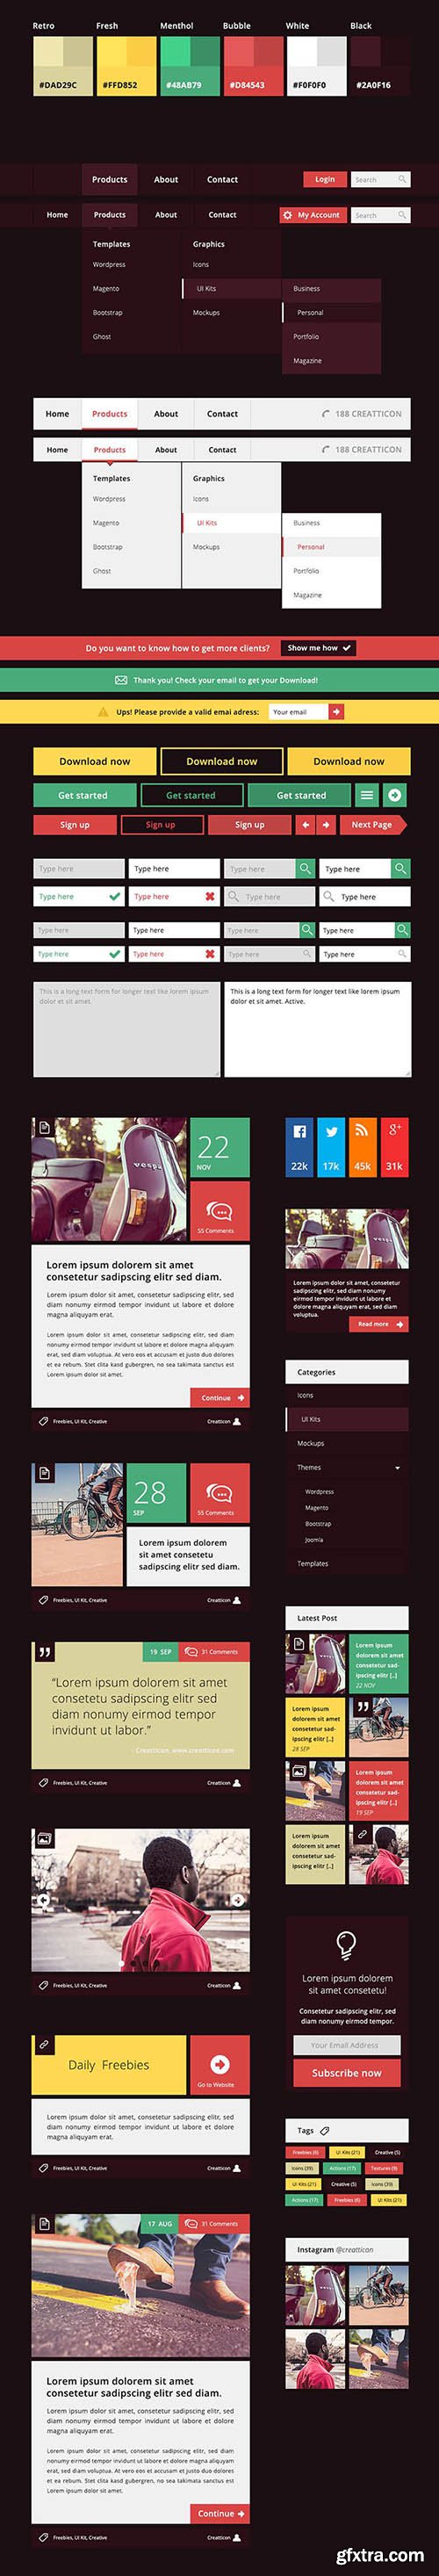 PSD Web Design - Creatticon UI Kit